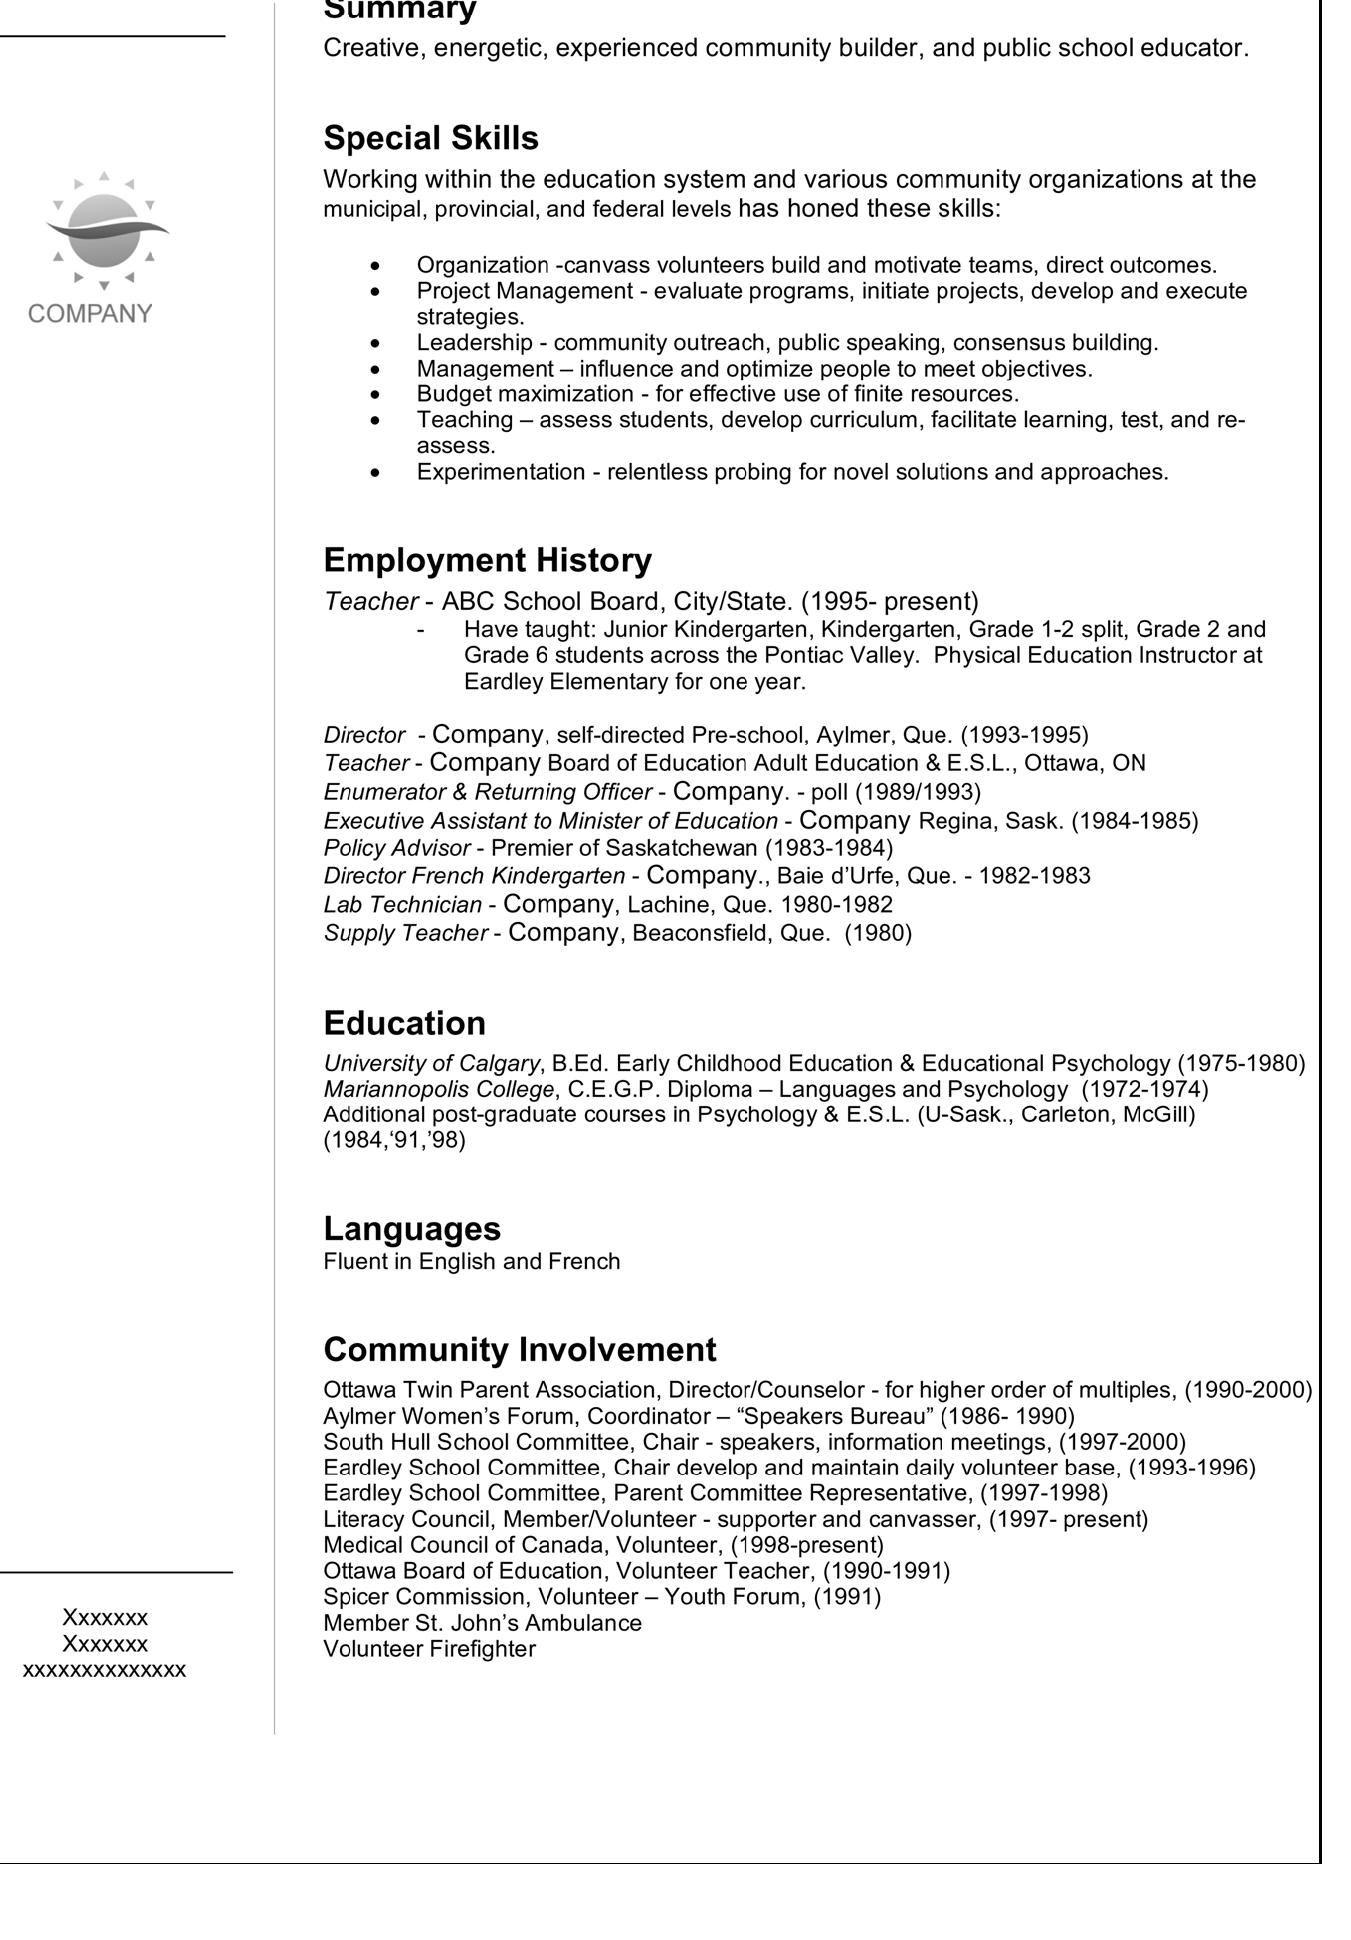 Professional resume company reviews